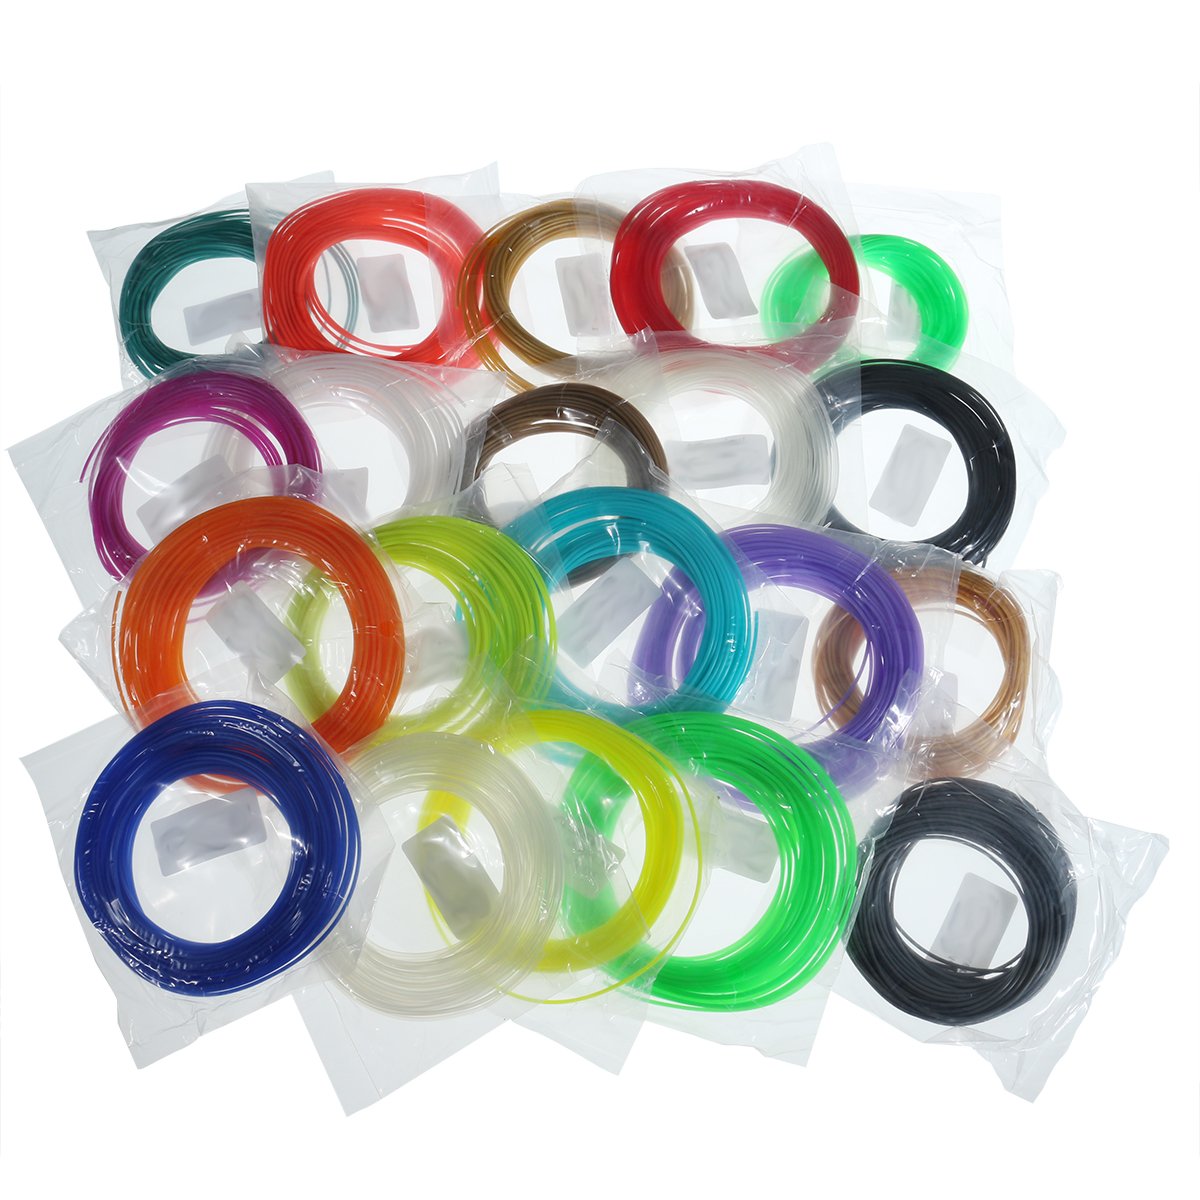 20 Colors/Pack 5/10m Length Per Color PLA 1.75mm Filament for 3D Printing Pen 0.4mm Nozzle 2